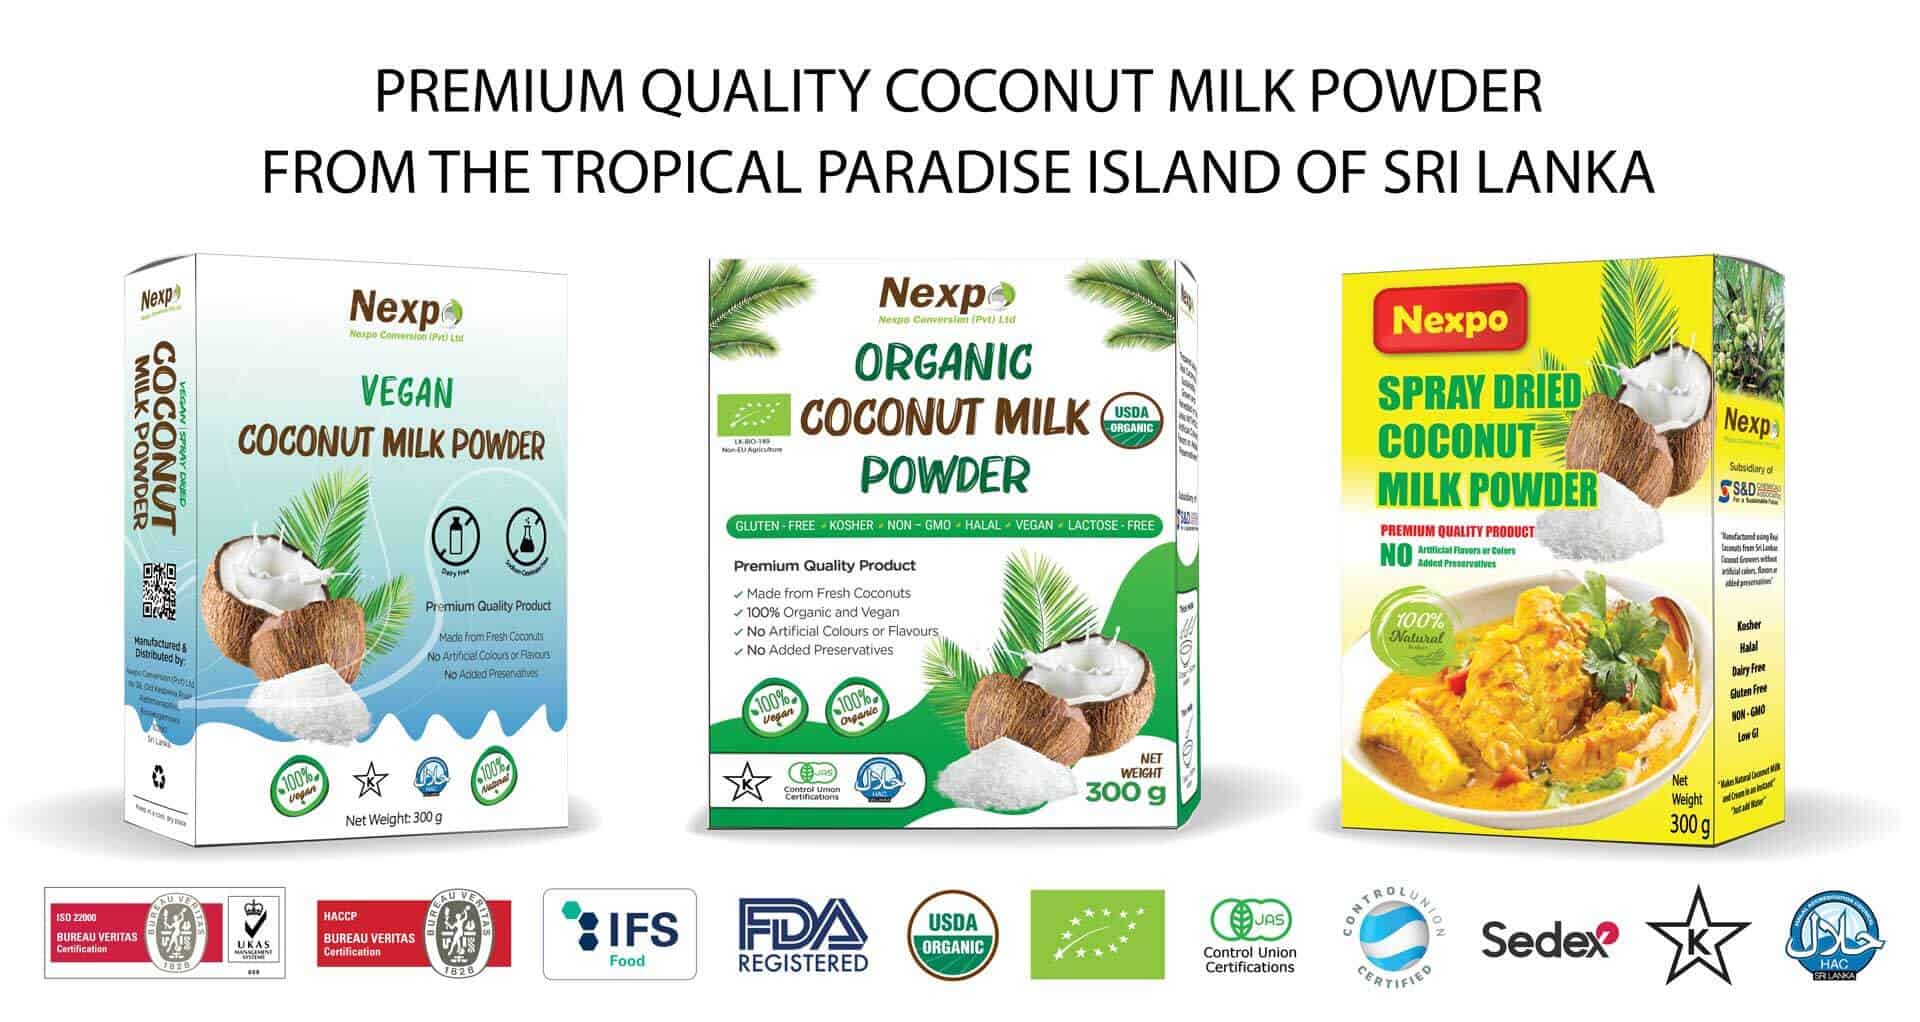 Nexpo Coconut Milk Powder